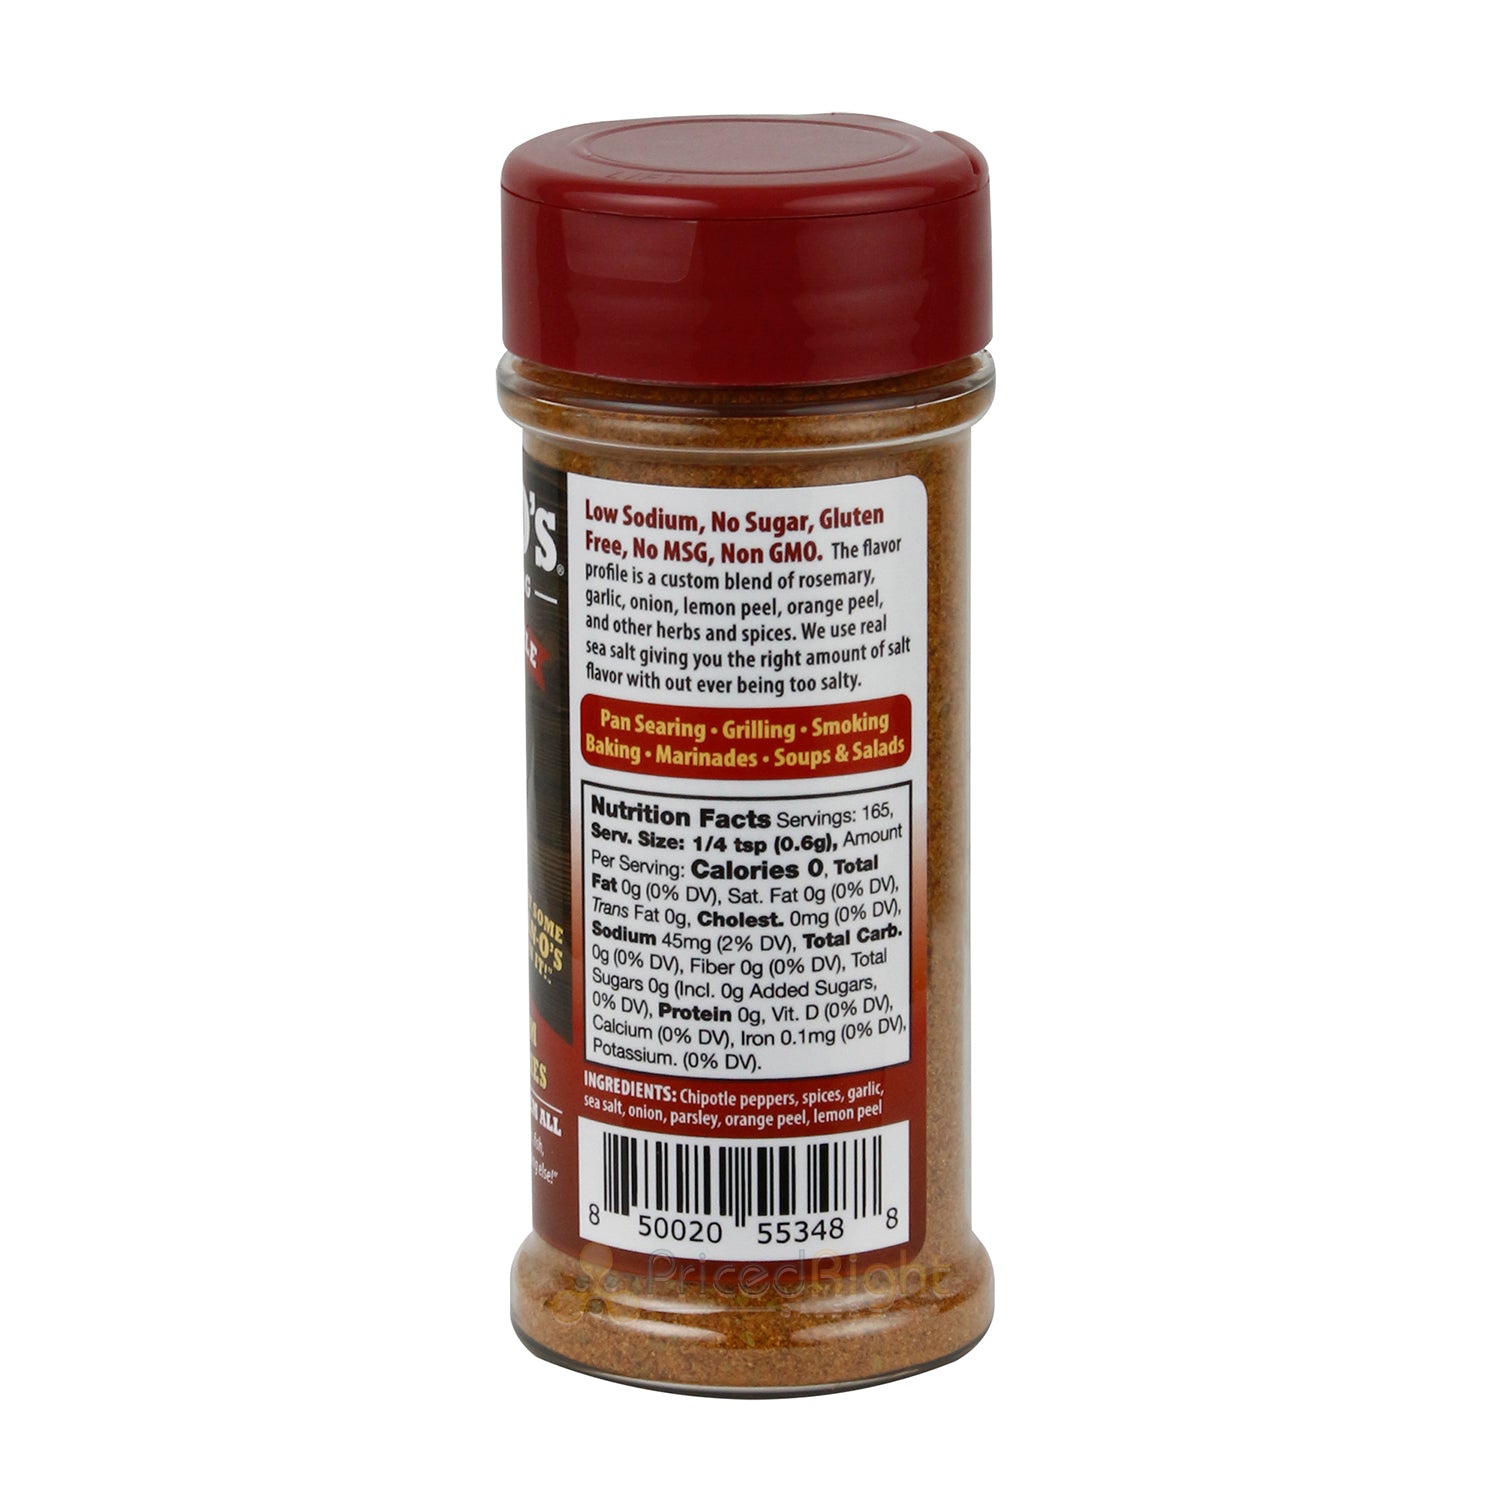 Dan-O's Seasoning Chipotle | Small Bottle | 1 Pack (3.5 oz)